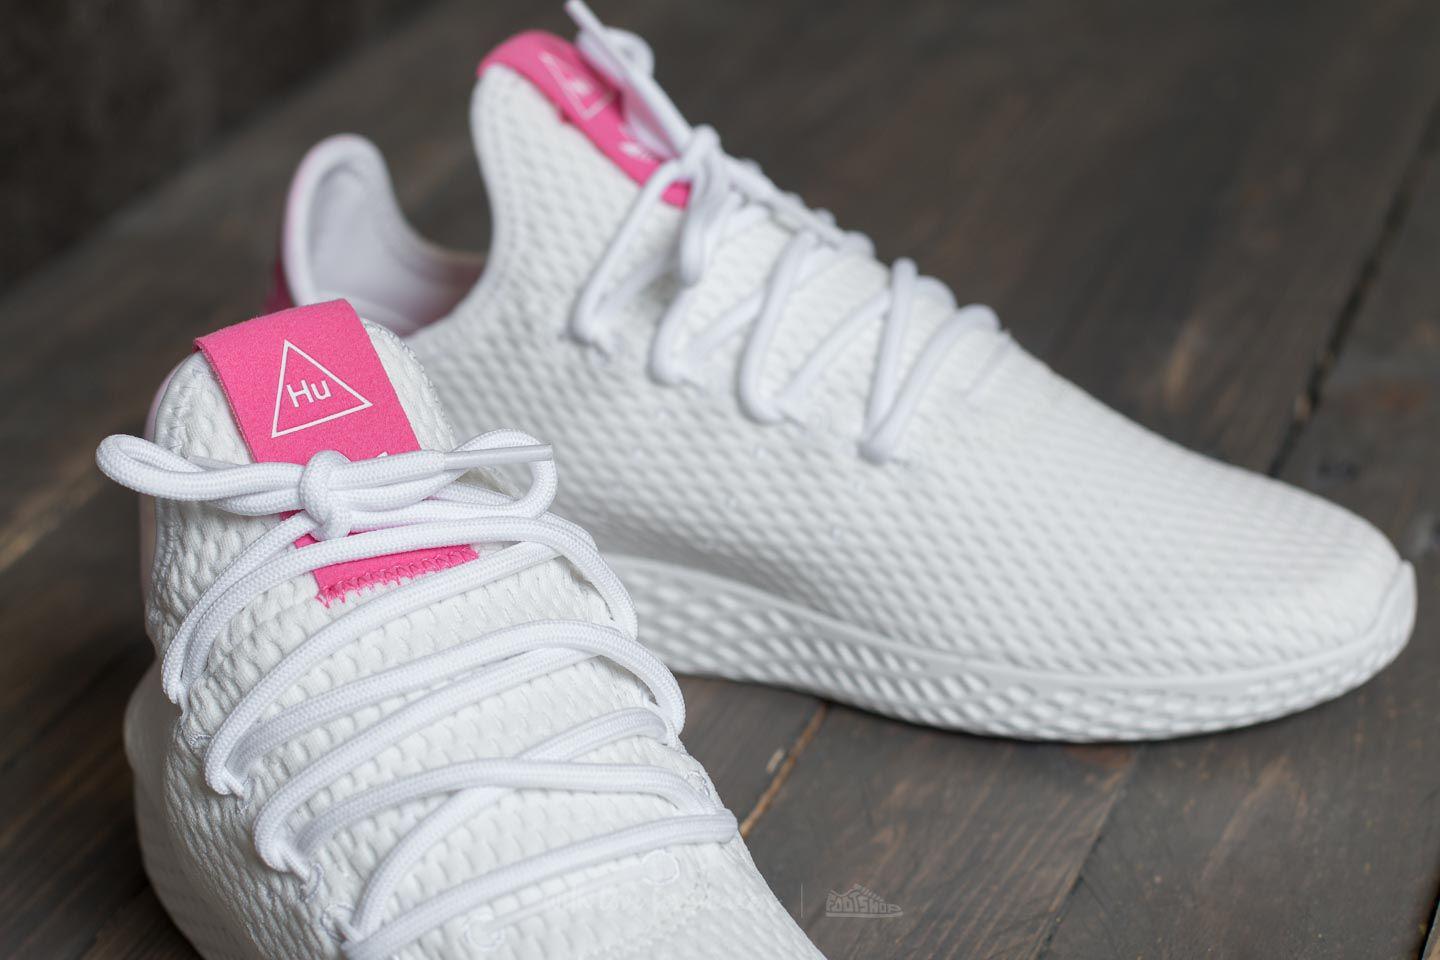 adidas pharrell williams tennis hu white pink